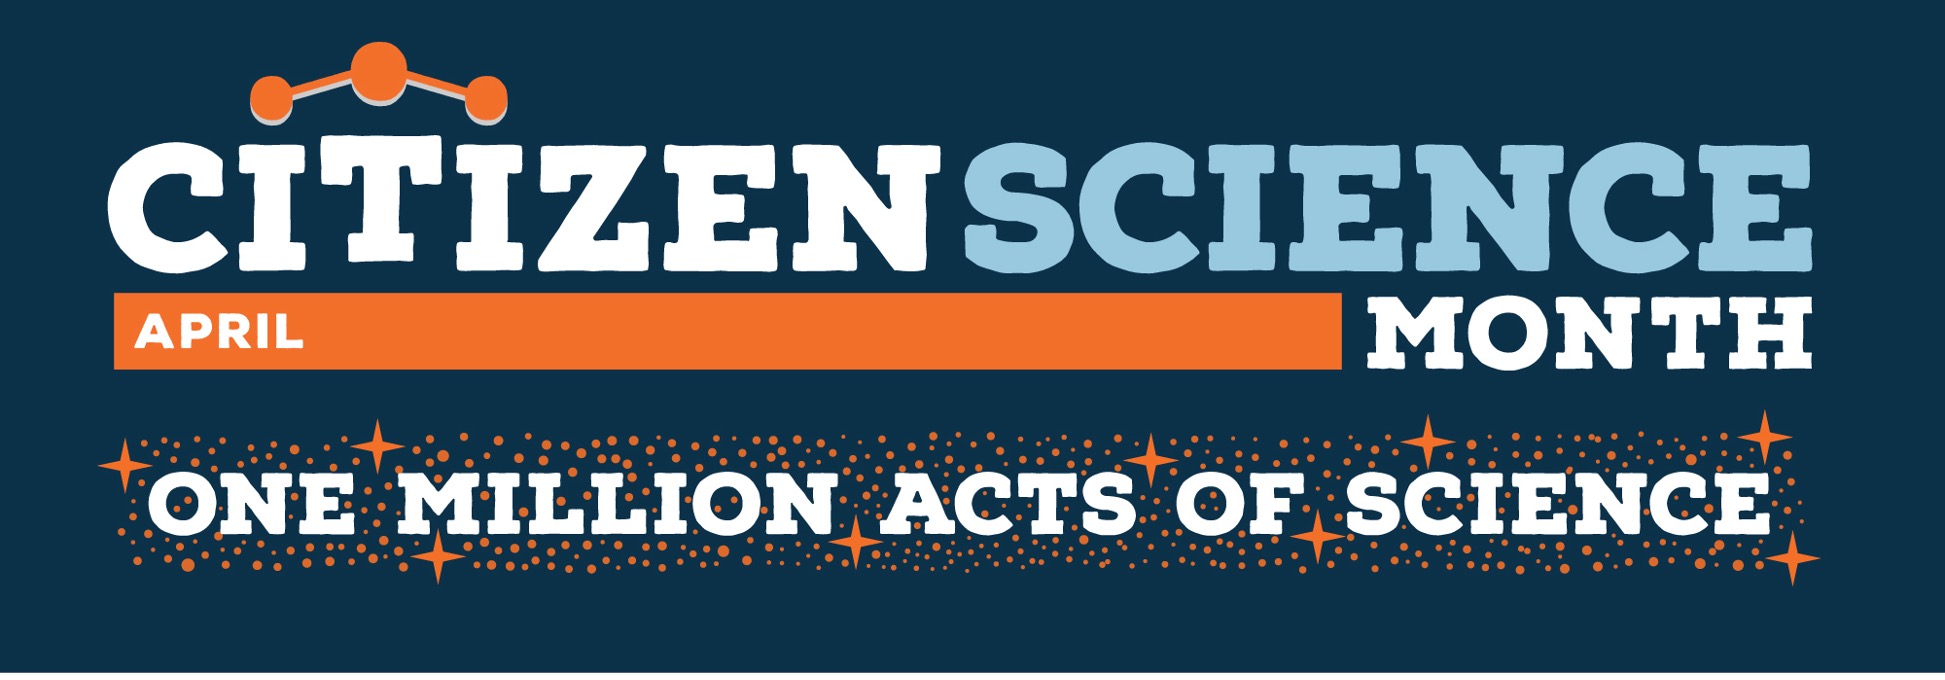 Citizen Science Month